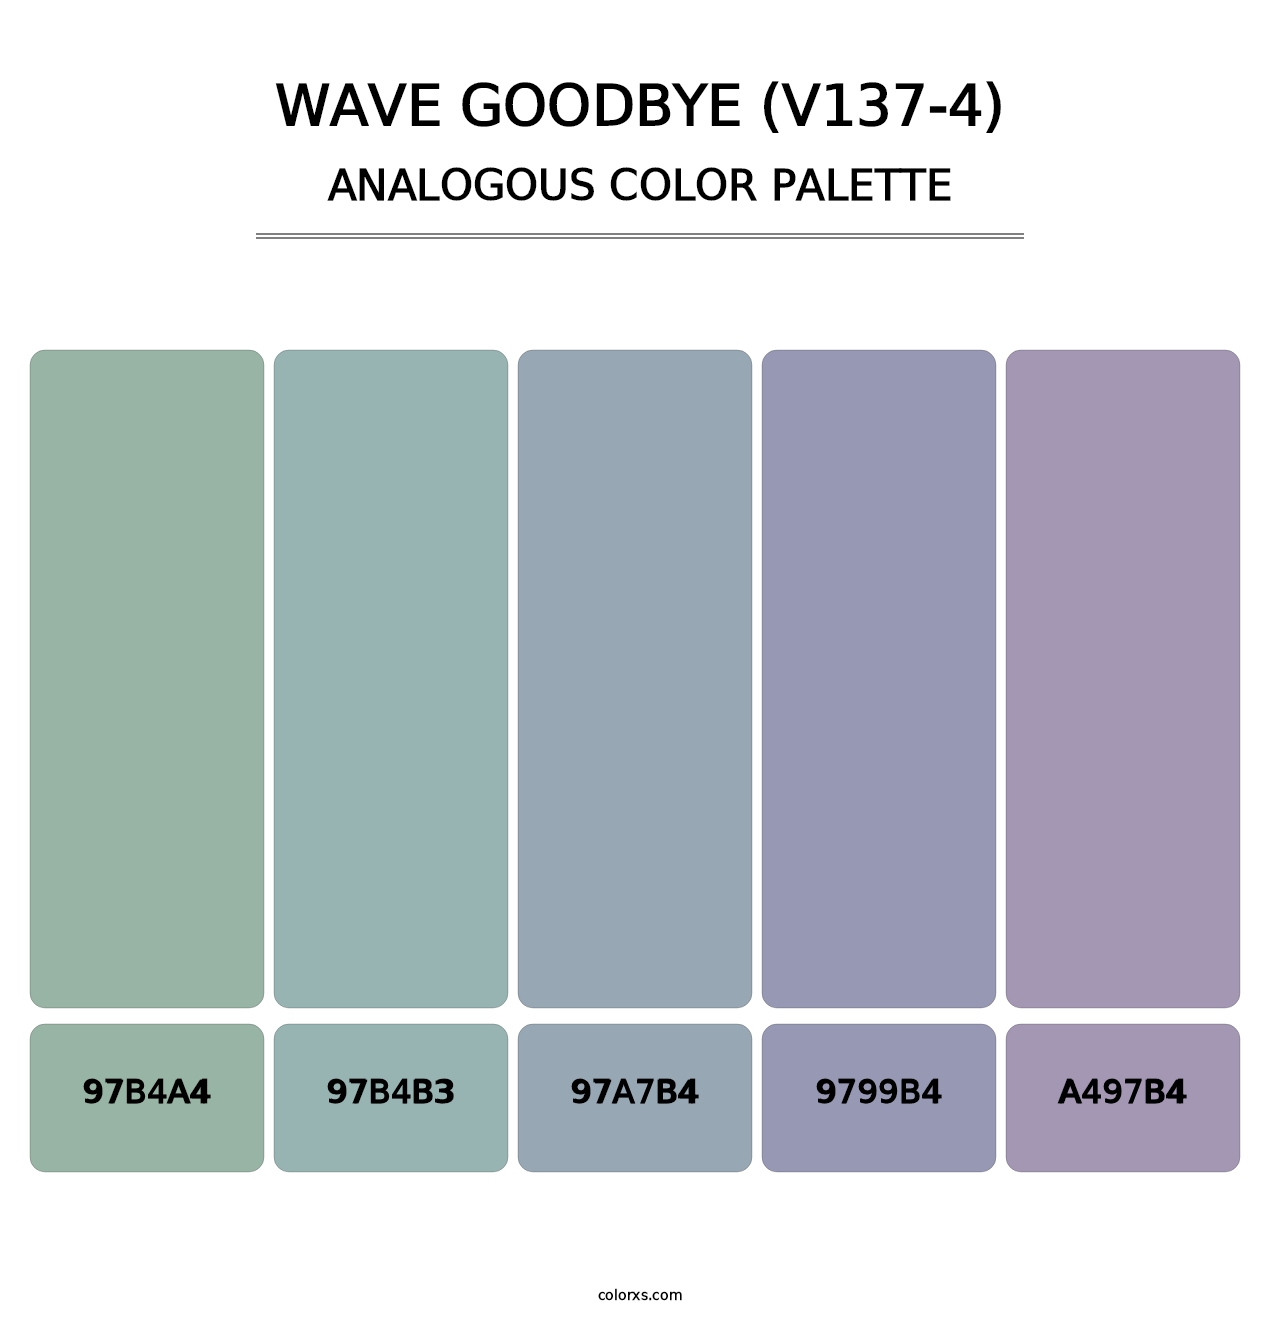 Wave Goodbye (V137-4) - Analogous Color Palette